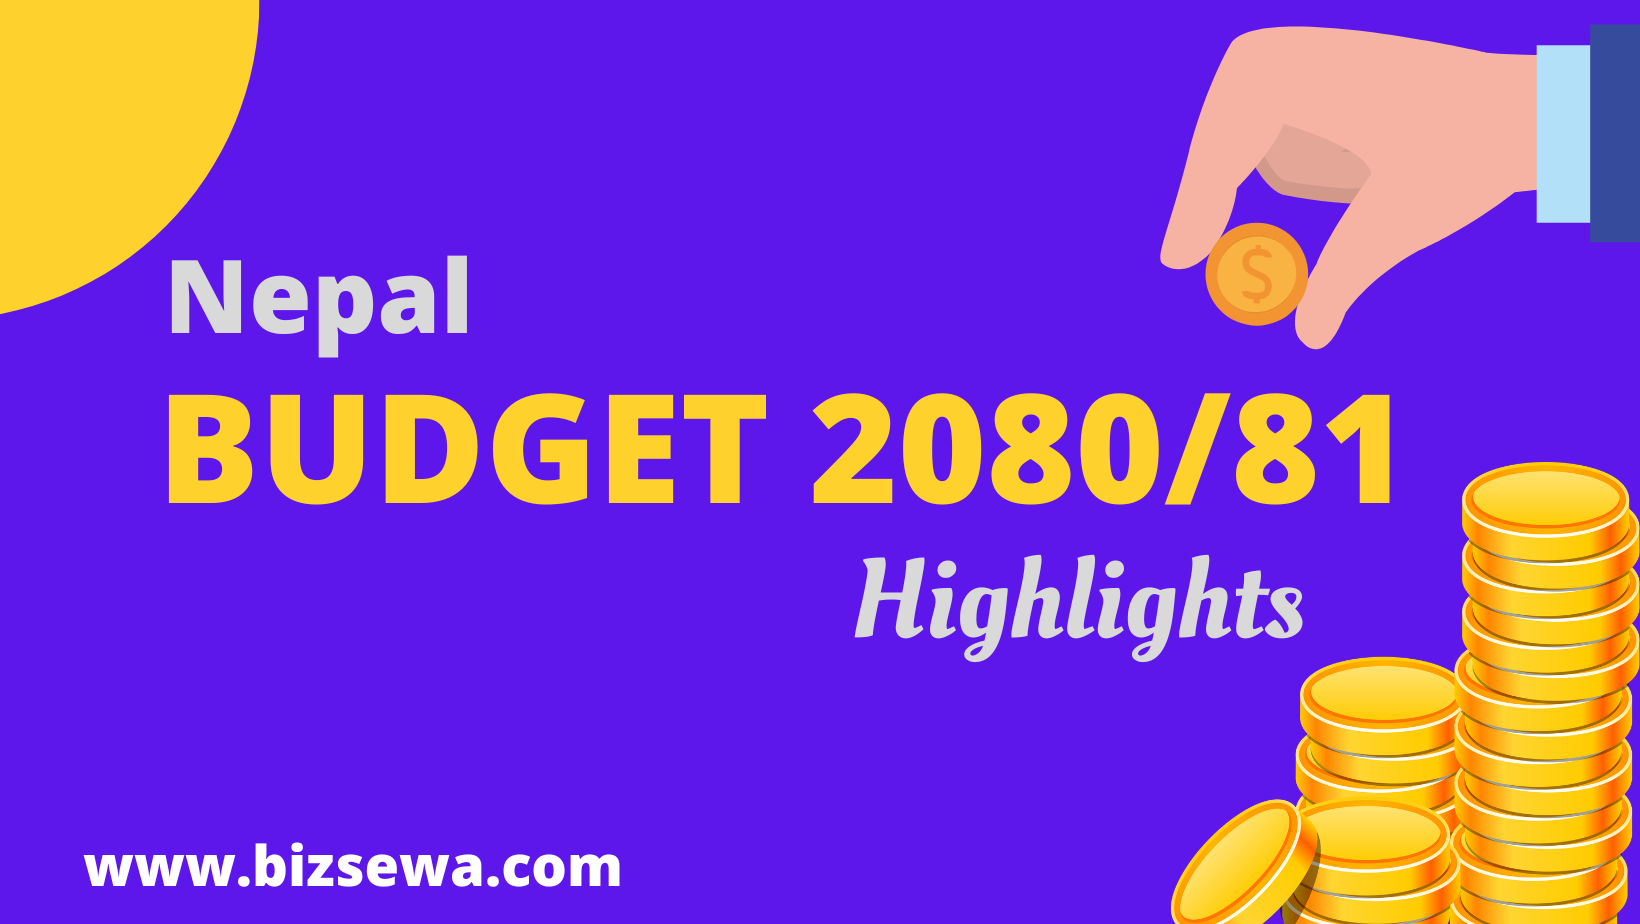 Budget Highlights 208081 